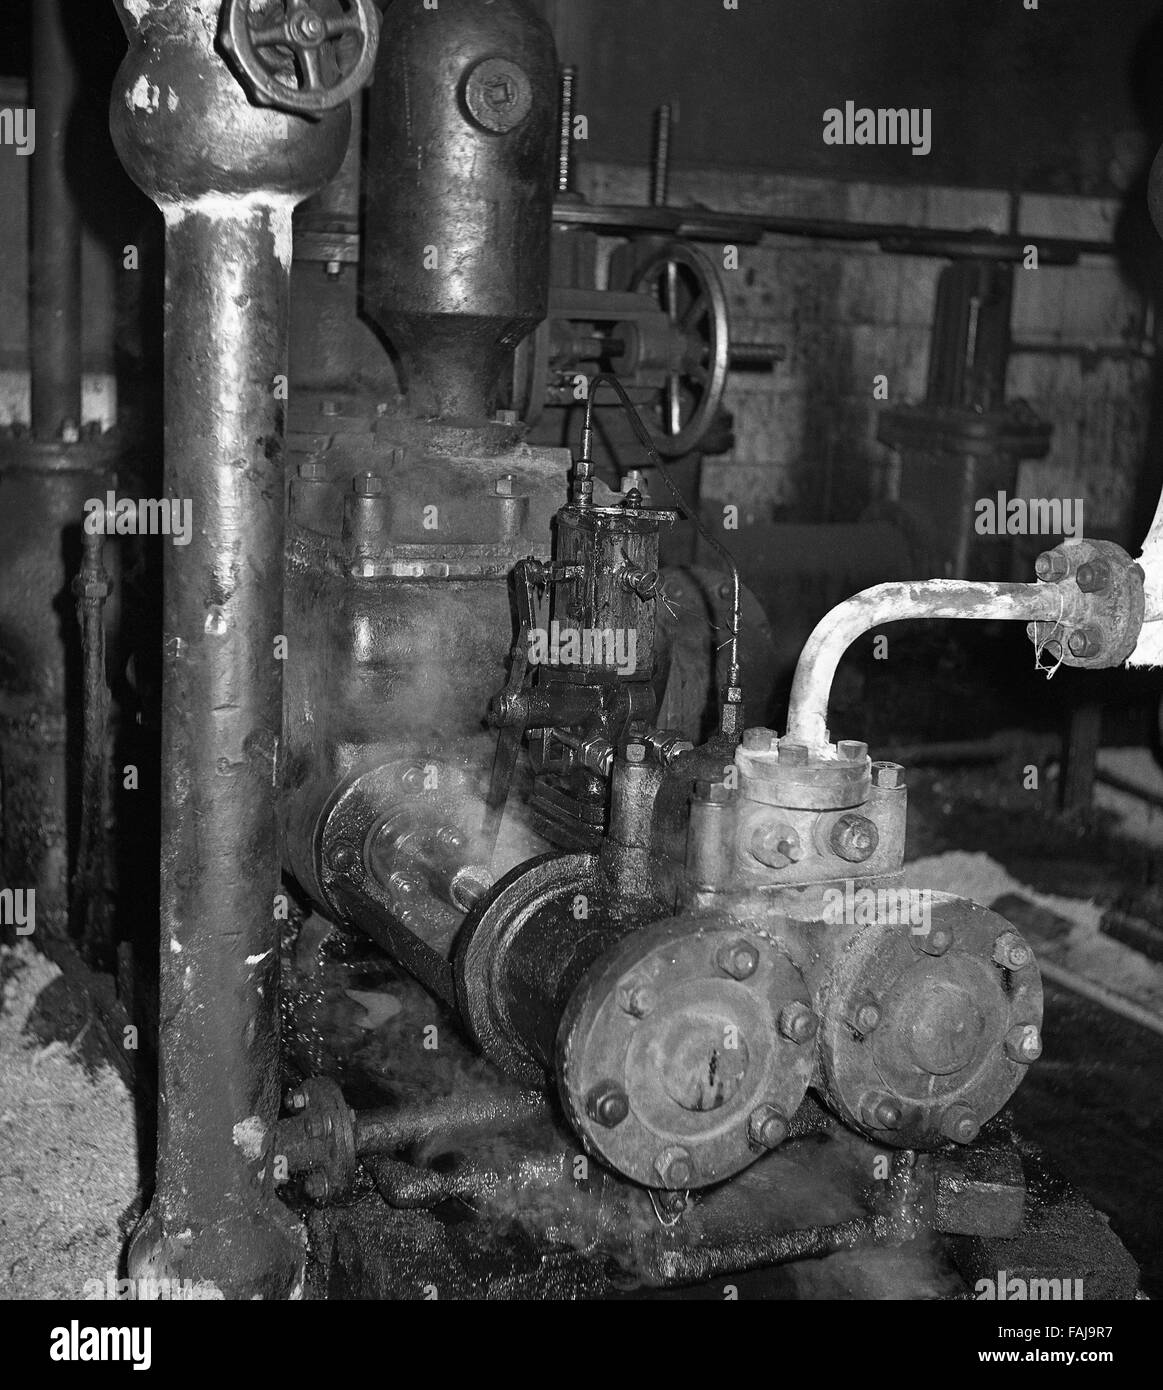 Steam tar pump on coke oven plant. Stock Photo